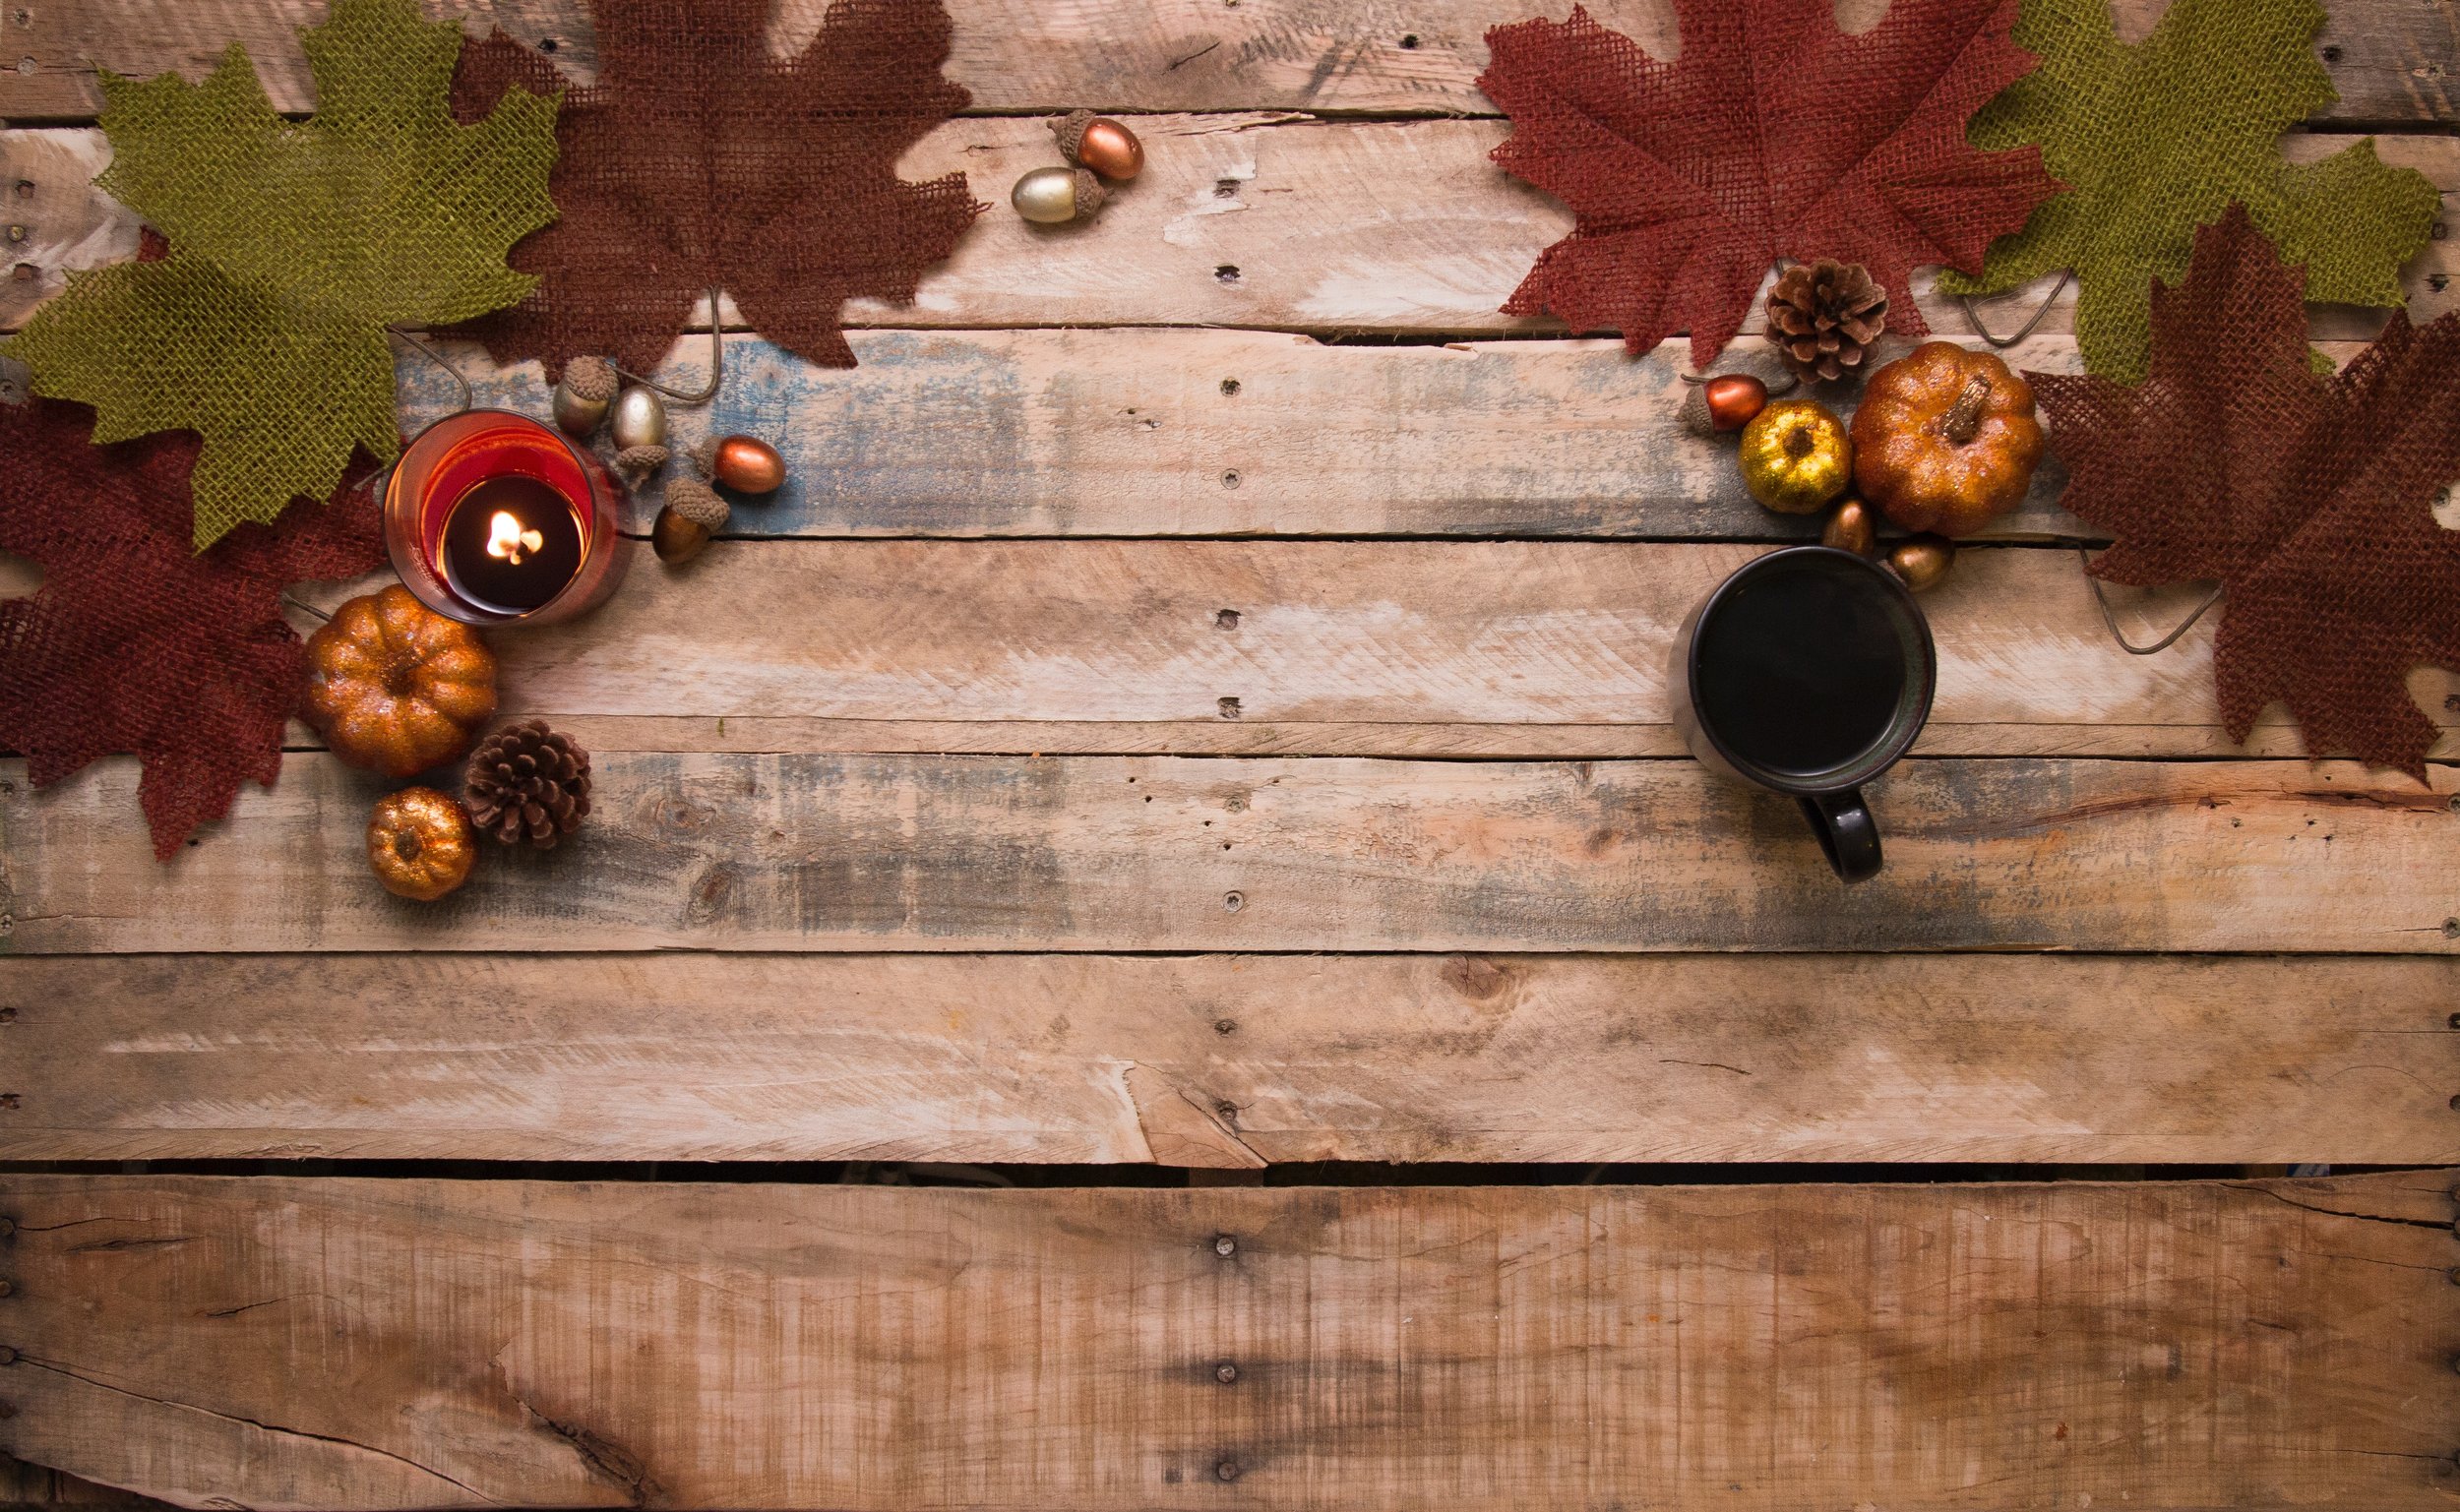 acorns-autumn-autumn-decoration-730286.jpg